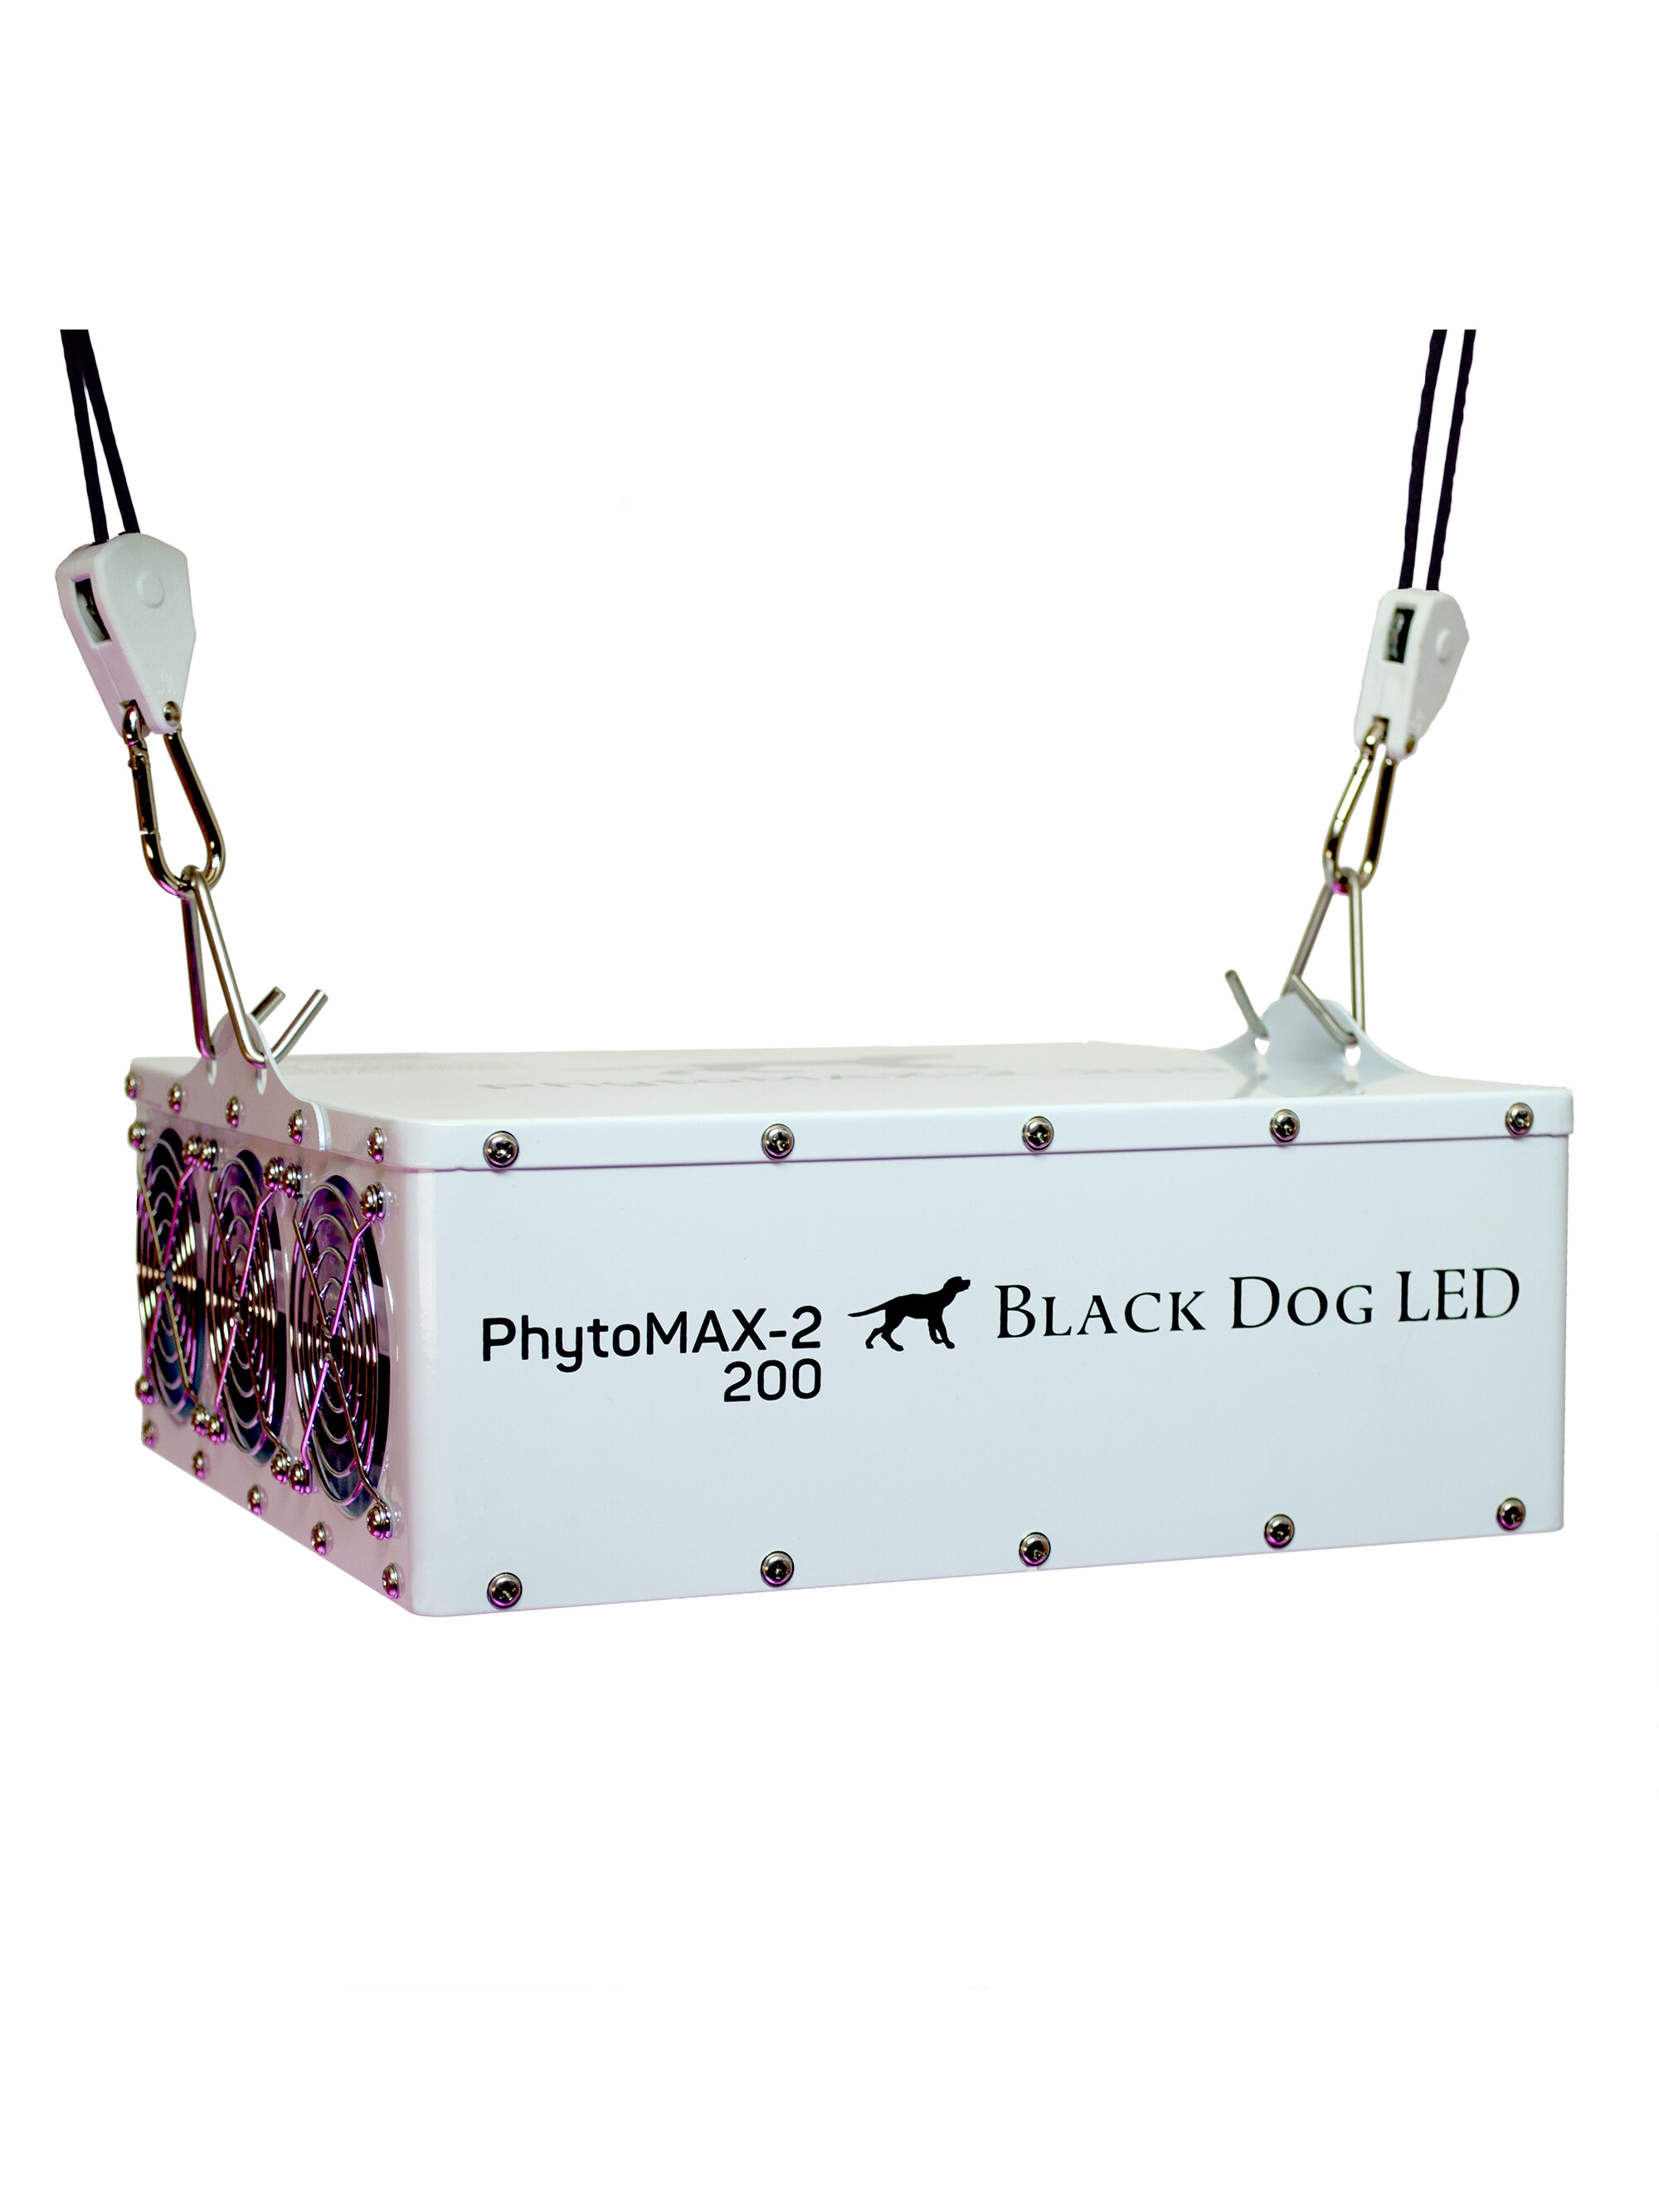 Black Dog Phytomax-2 200 LED Grow Light | Gardeners.com